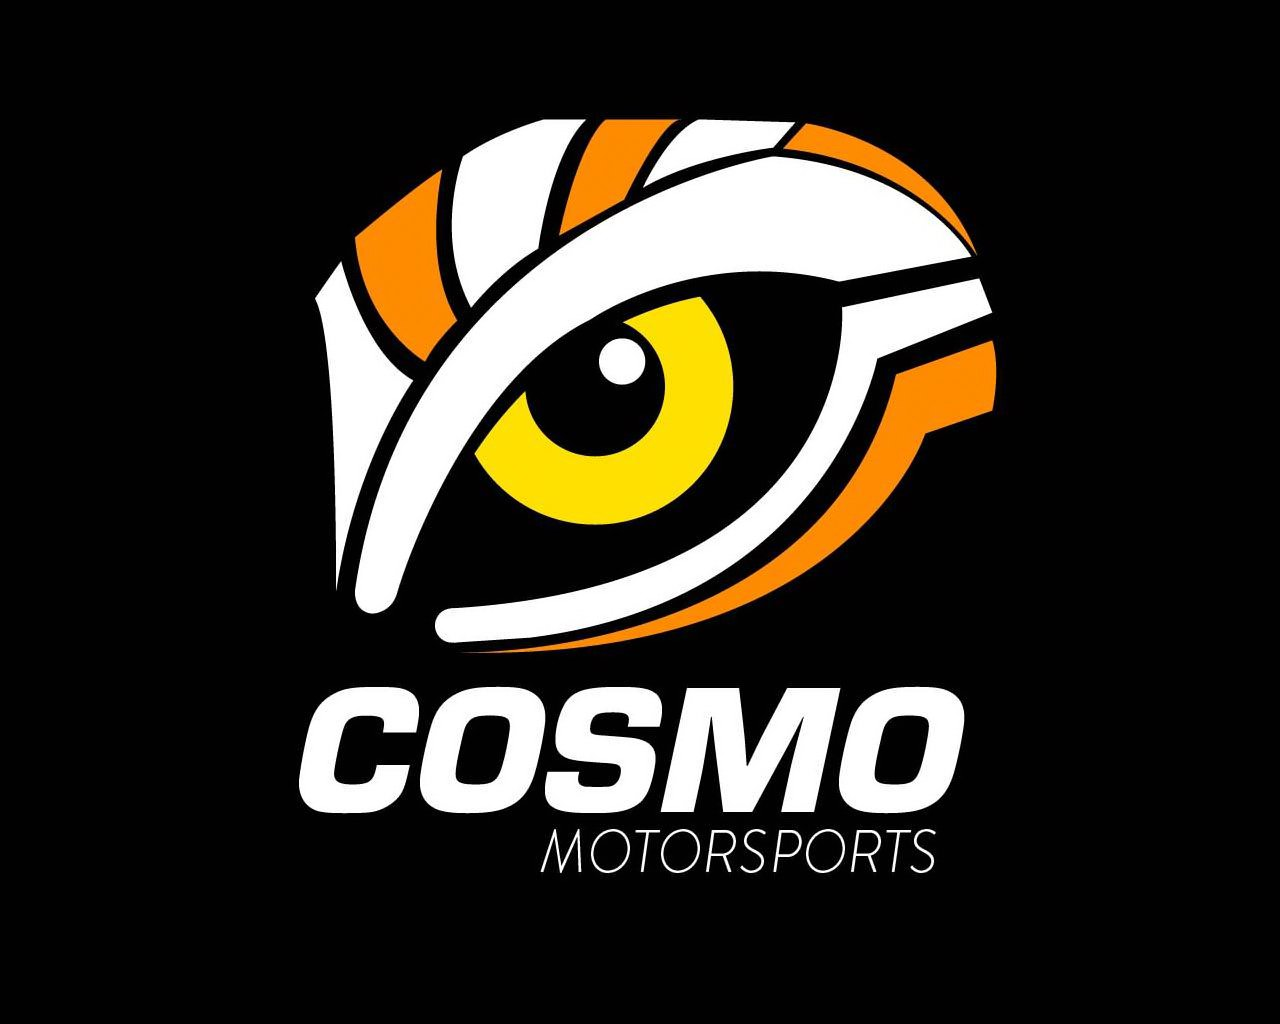  COSMO MOTORSPORTS